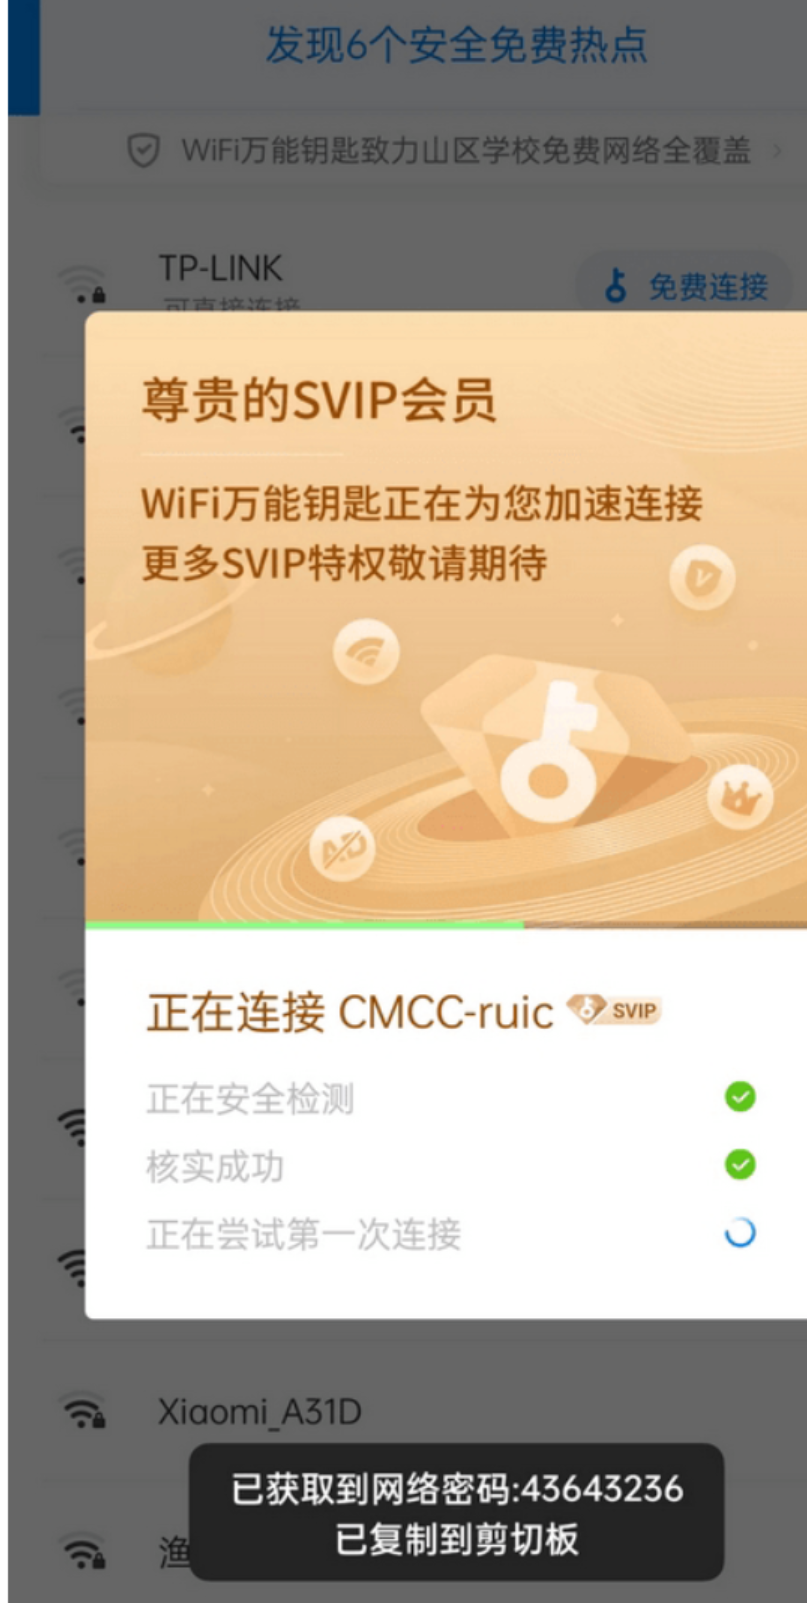 WiFi万能钥匙 v4.9.65  for Android 无广告显示密码版-木风软件站